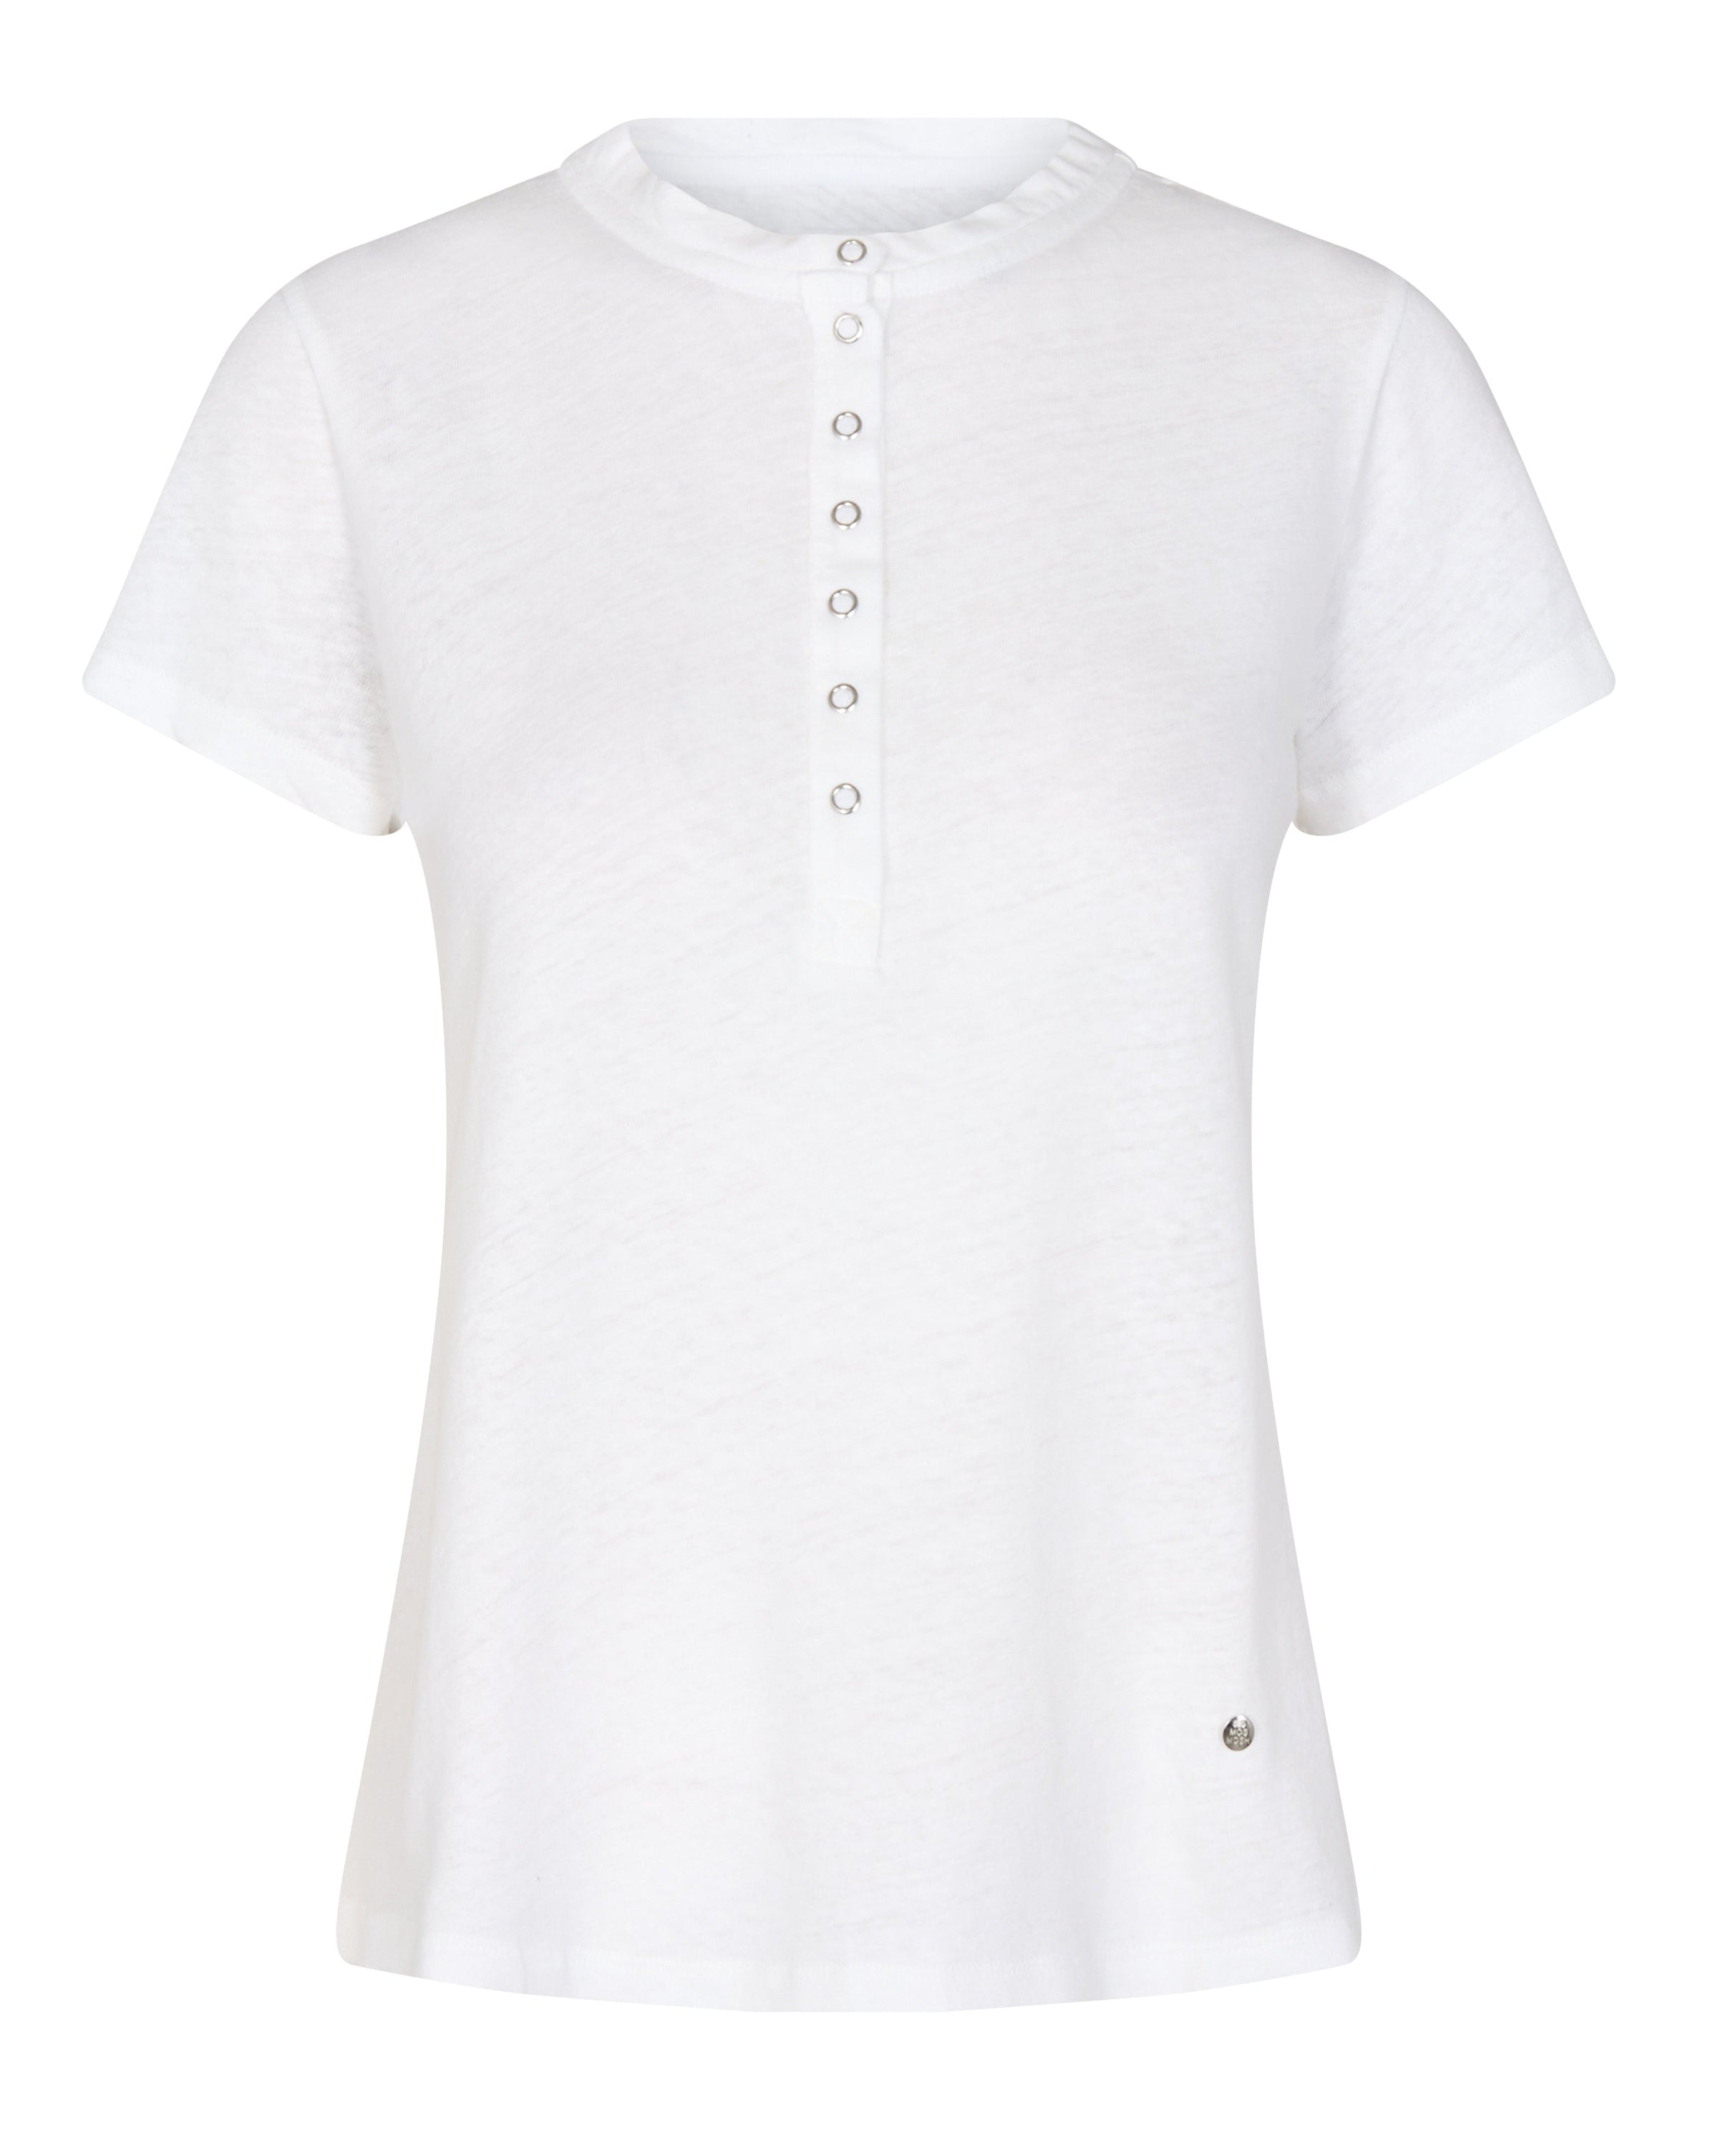 White short sleeves tshirt with half placket and metallic stud press stud fastenings